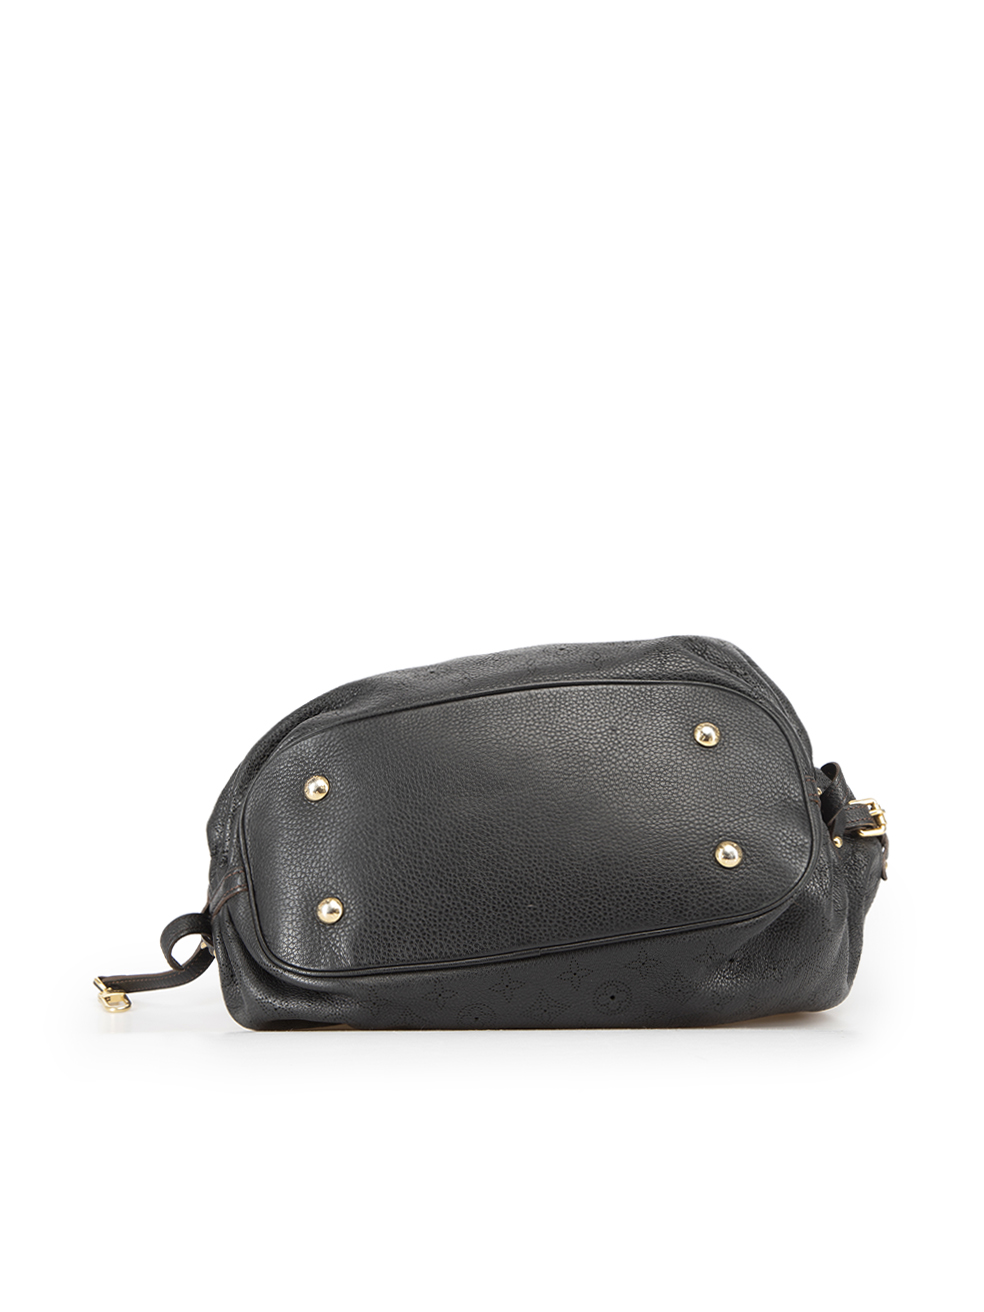 Louis Vuitton Pre-owned Mahina XL Handbag - Black